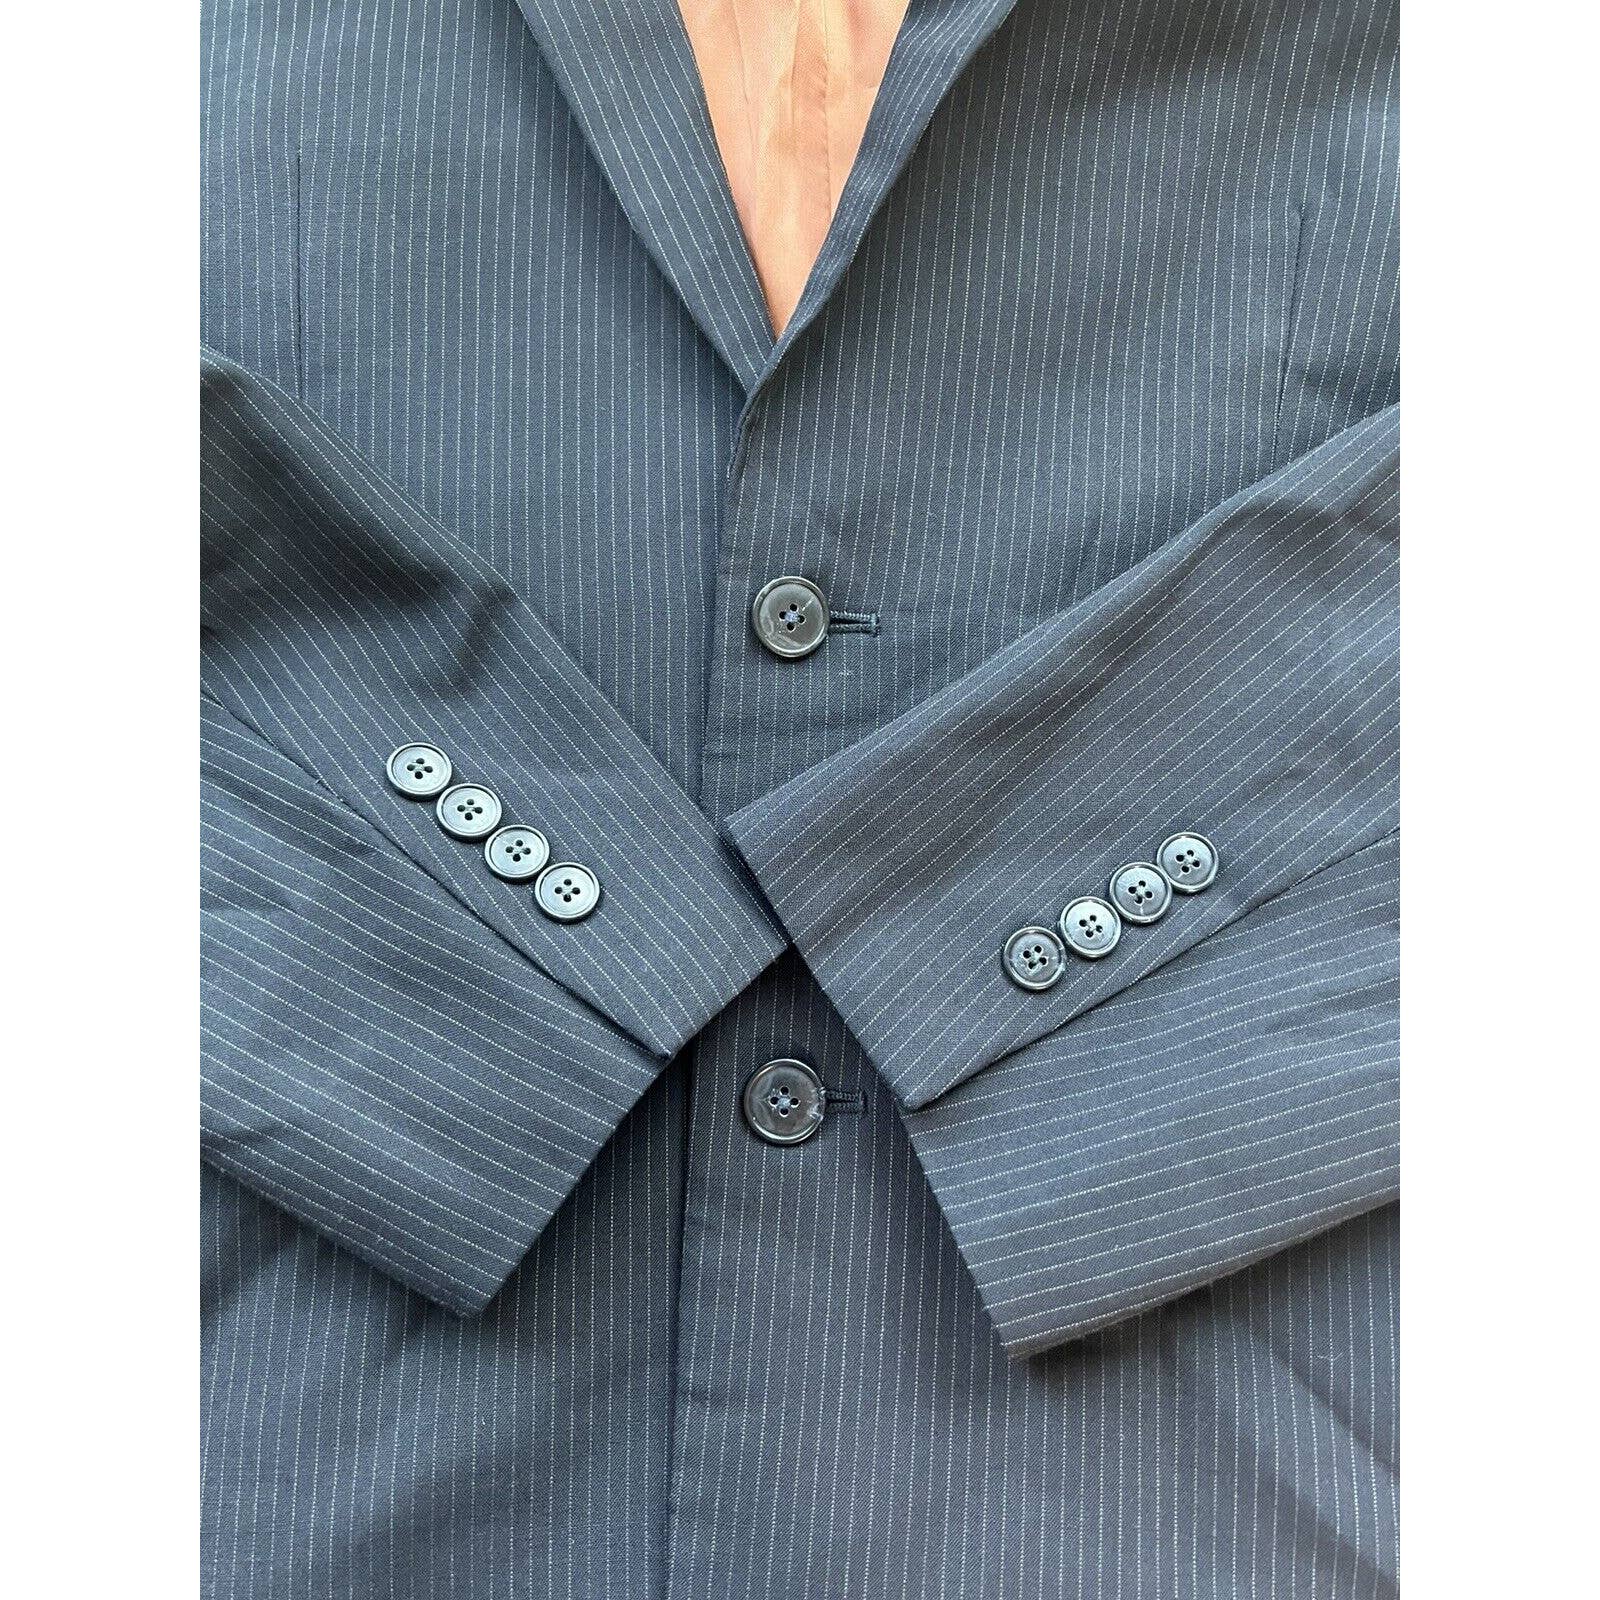 JOS. A. BANK 2 Button Blazer Men’s 42L Slim Fit Wool Navy Blue Striped Jacket